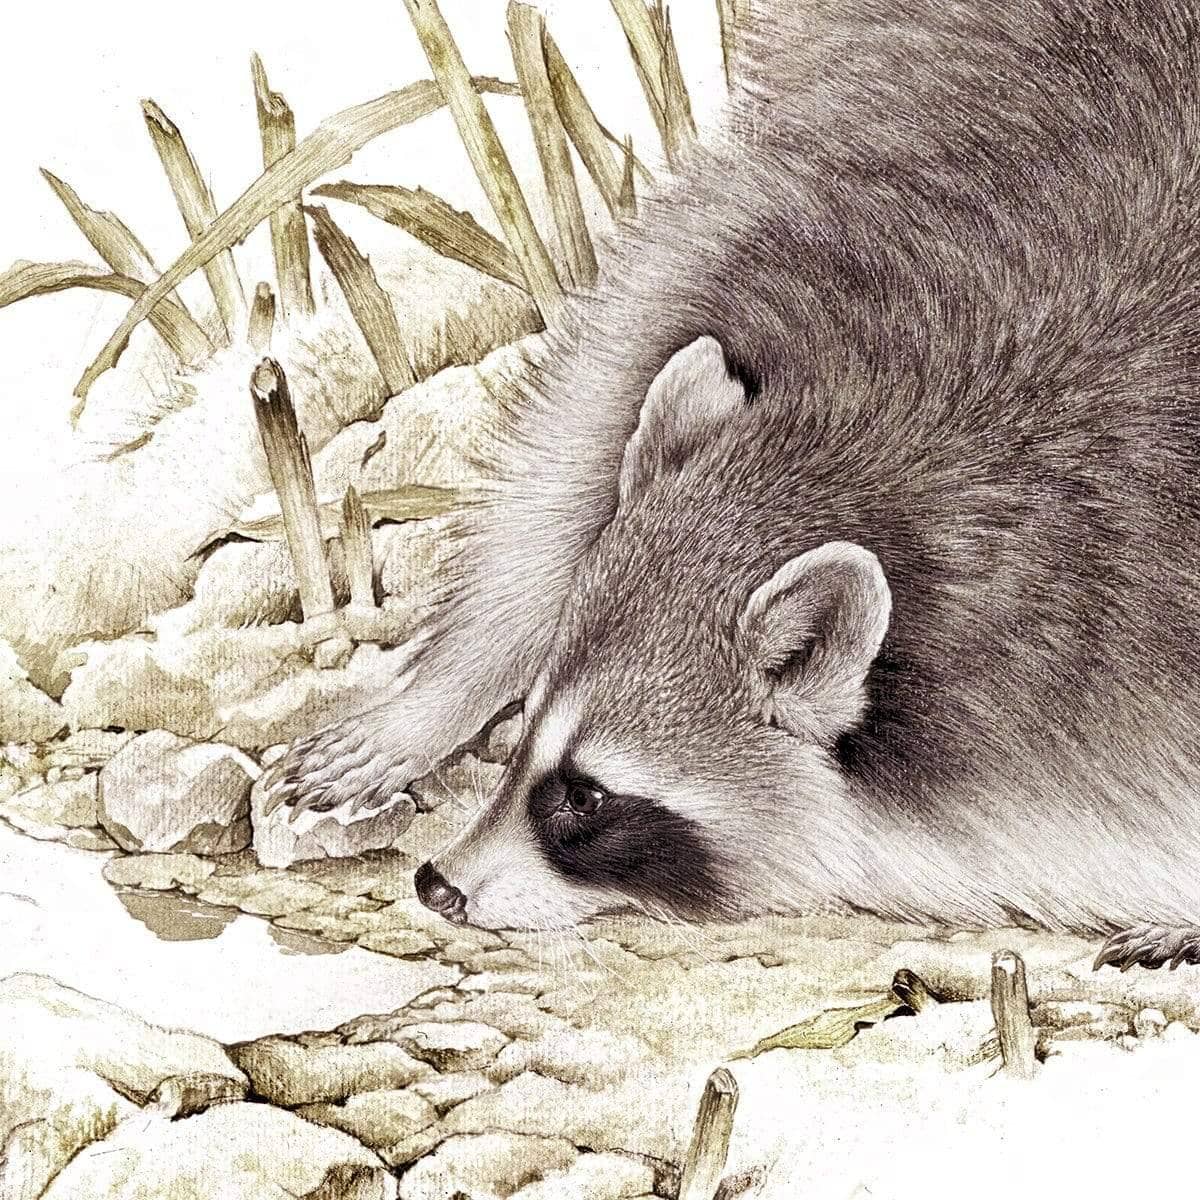 Raccoon - Framed Print | Artwork by Glen Loates